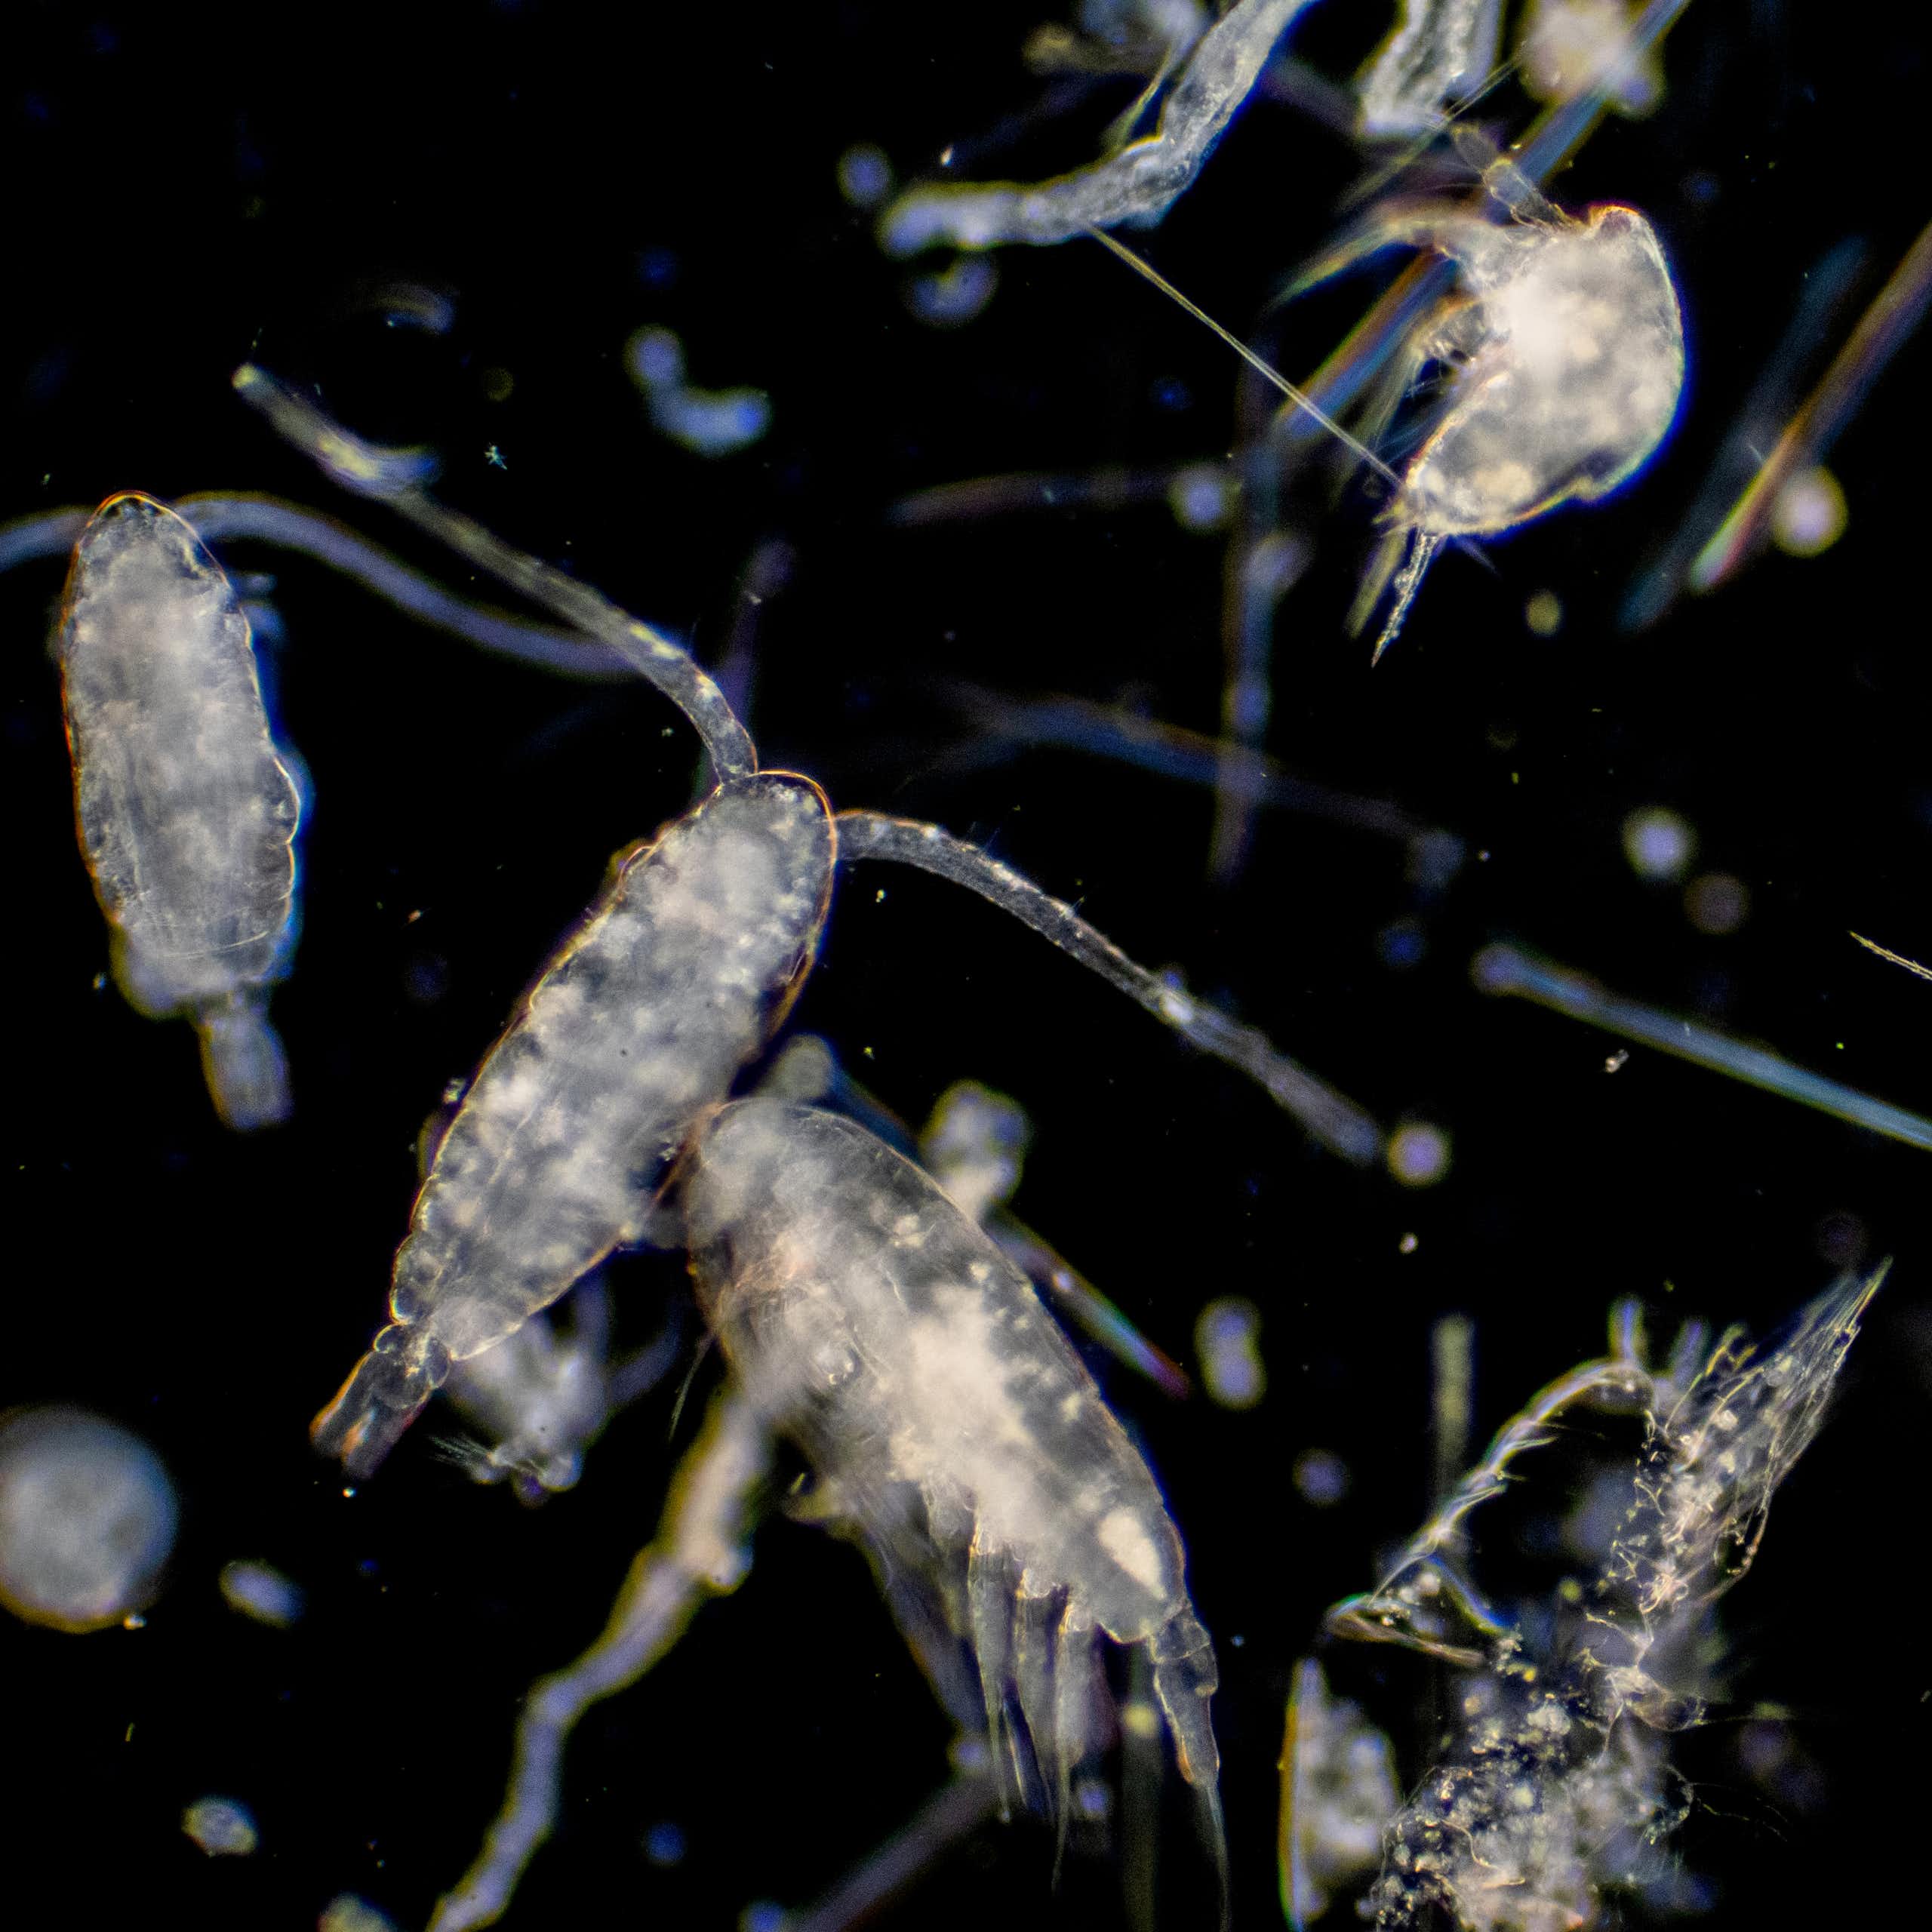 Tiny plankton drifting against black background. 